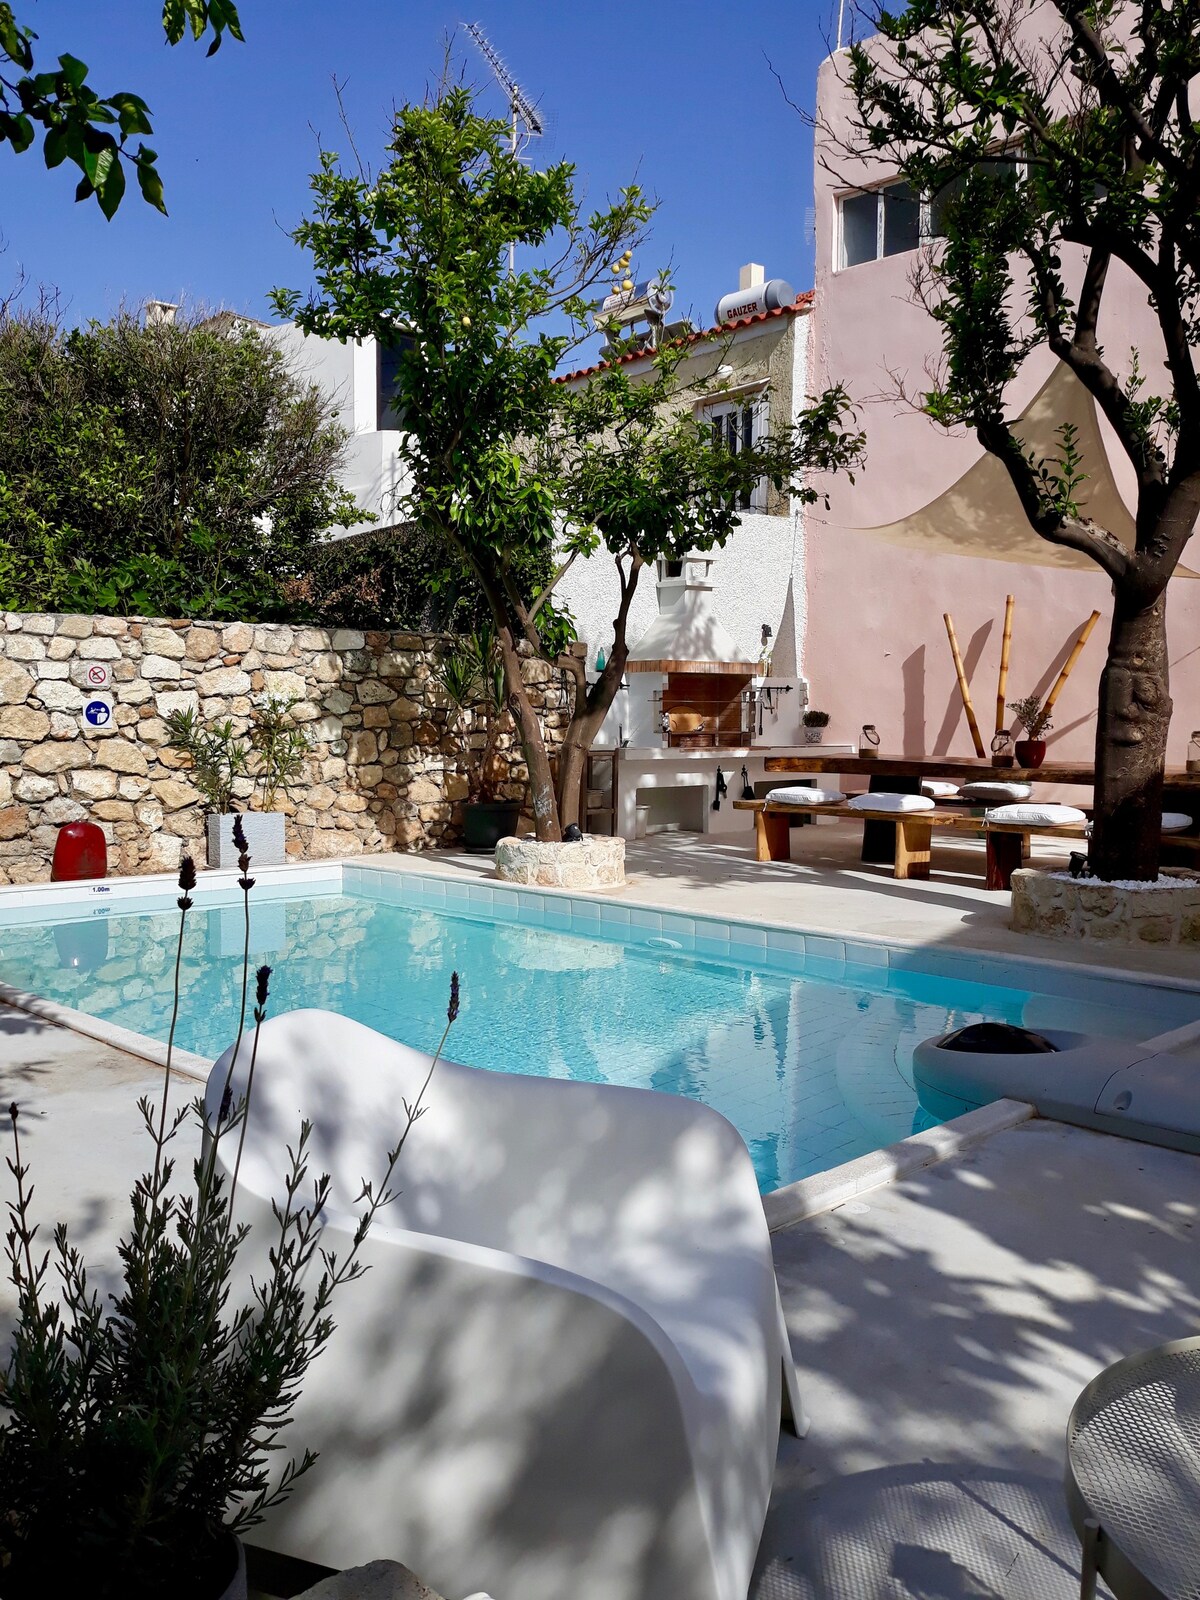 The Manor Rethymno, Crete - A Luxury Pool Oasis